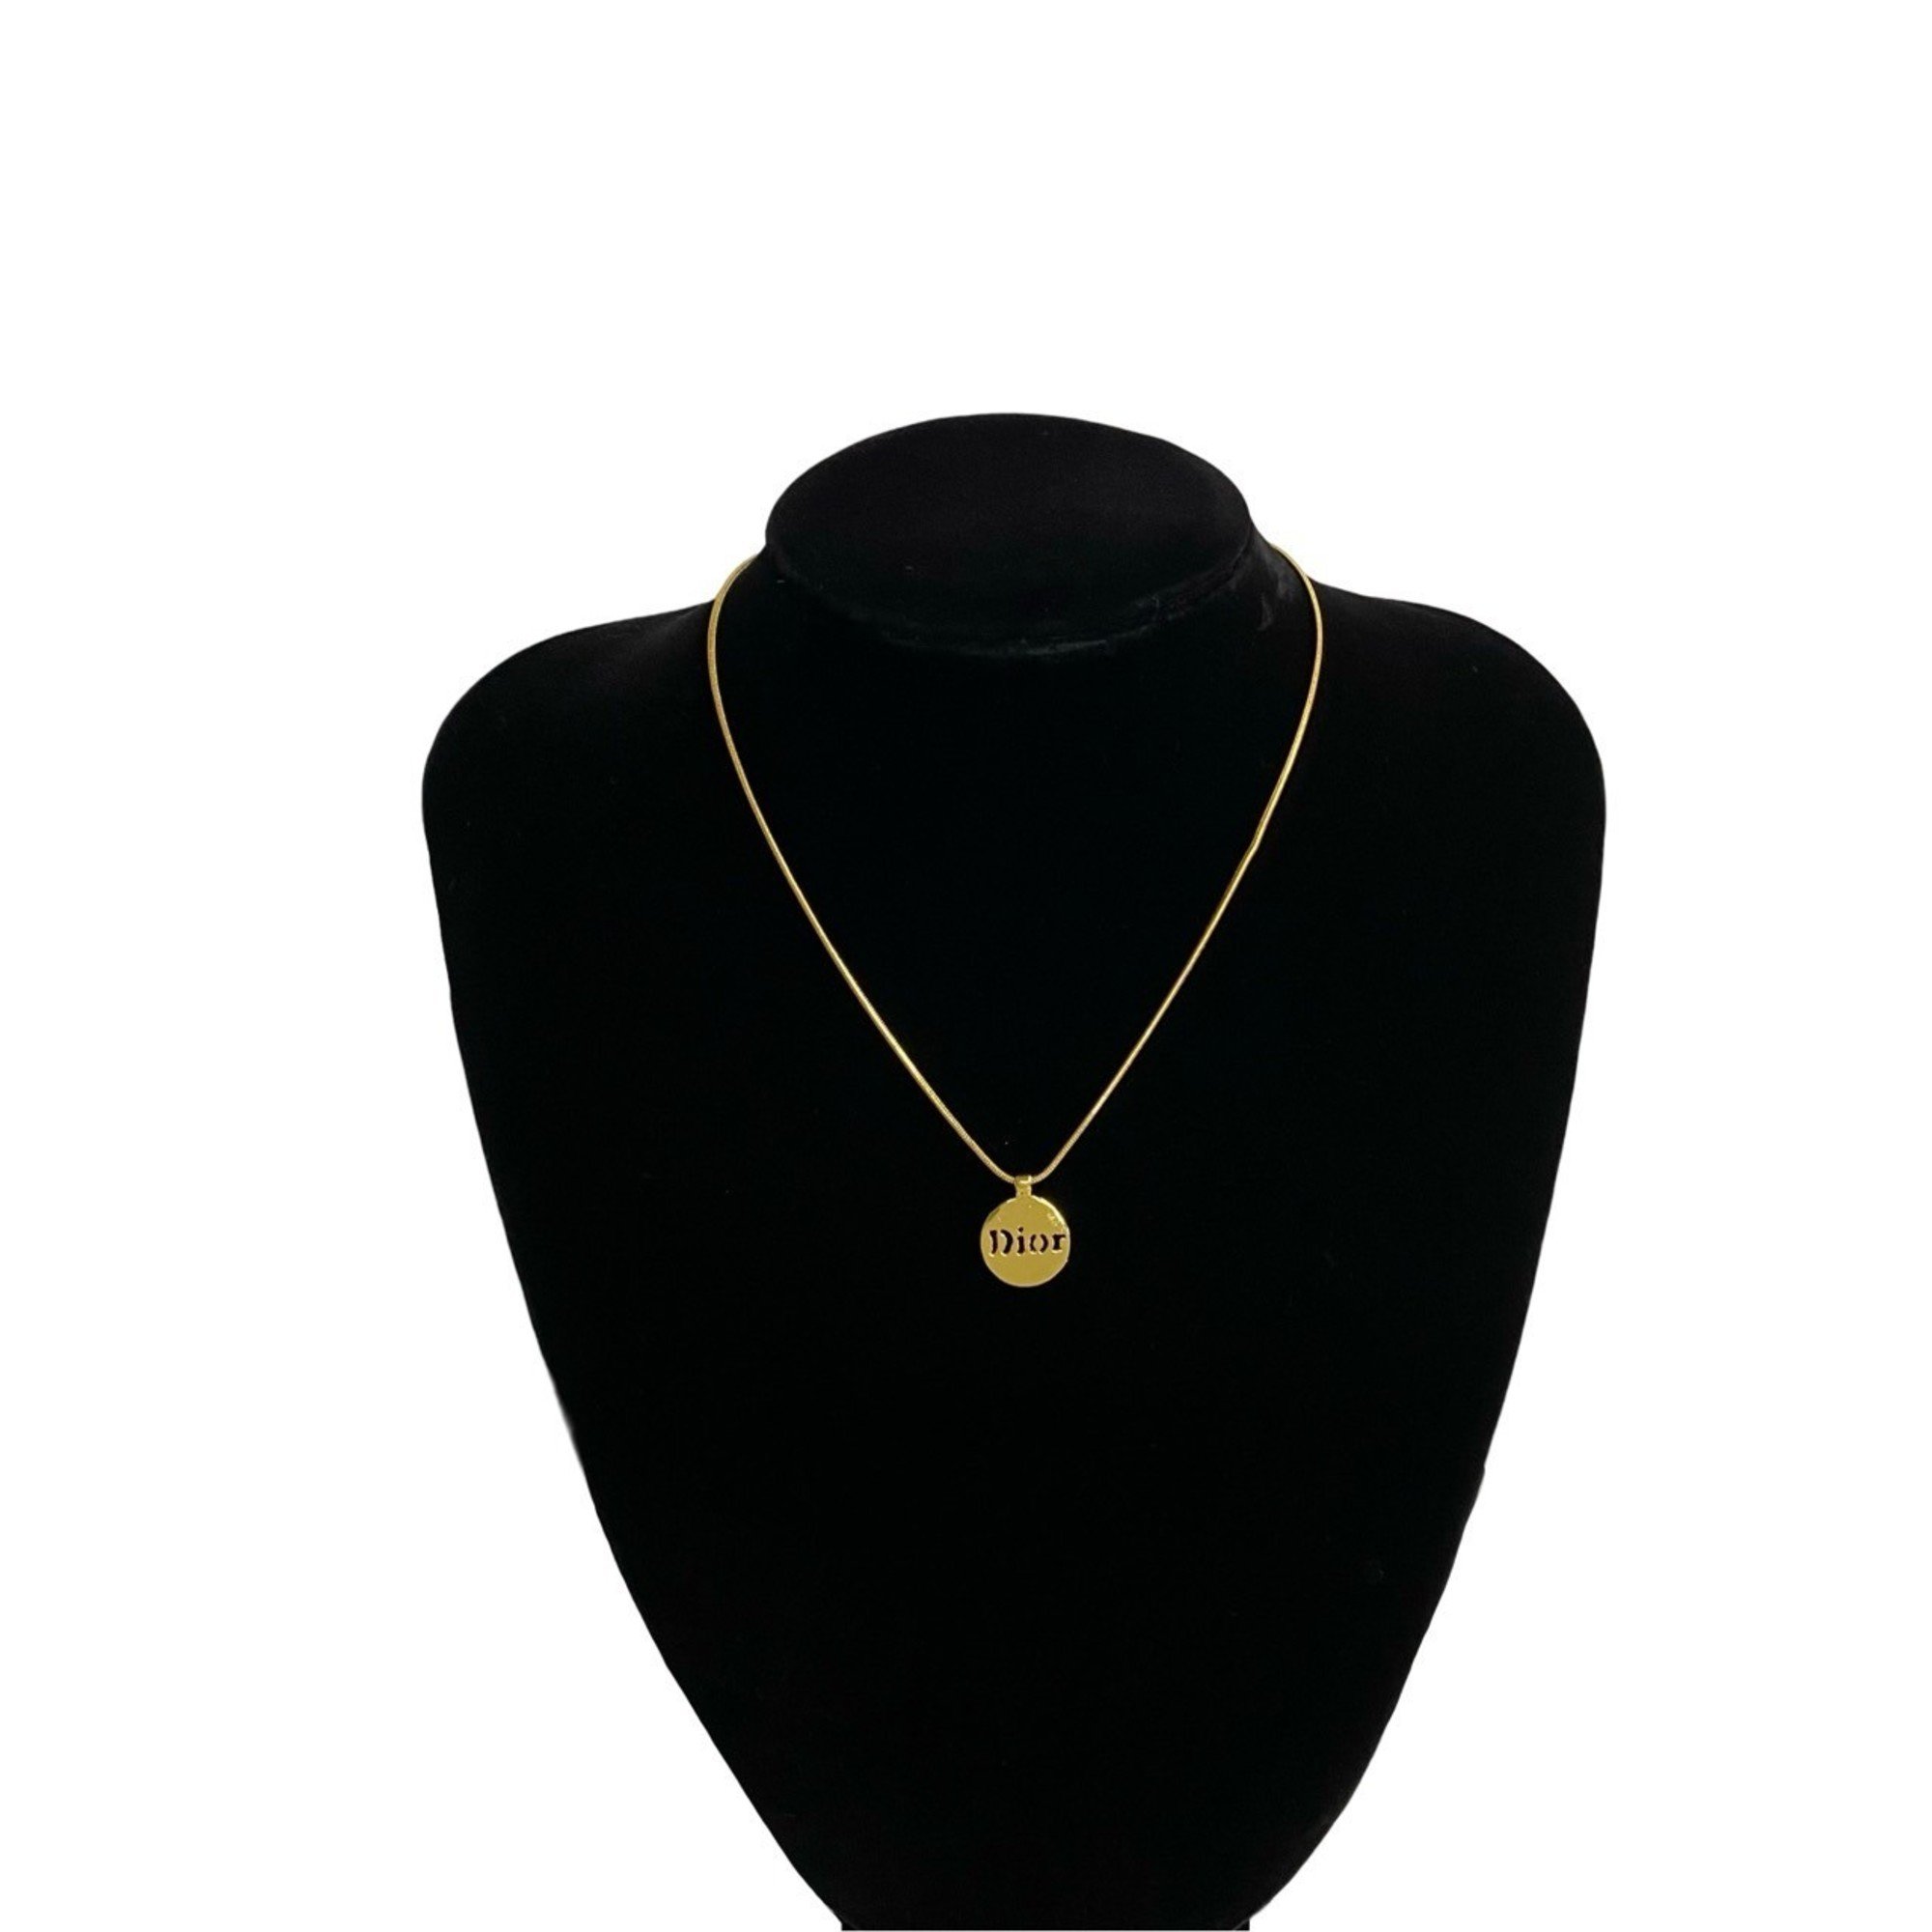 Christian Dior Motif Plate Chain Necklace Pendant Gold Women Men 19650